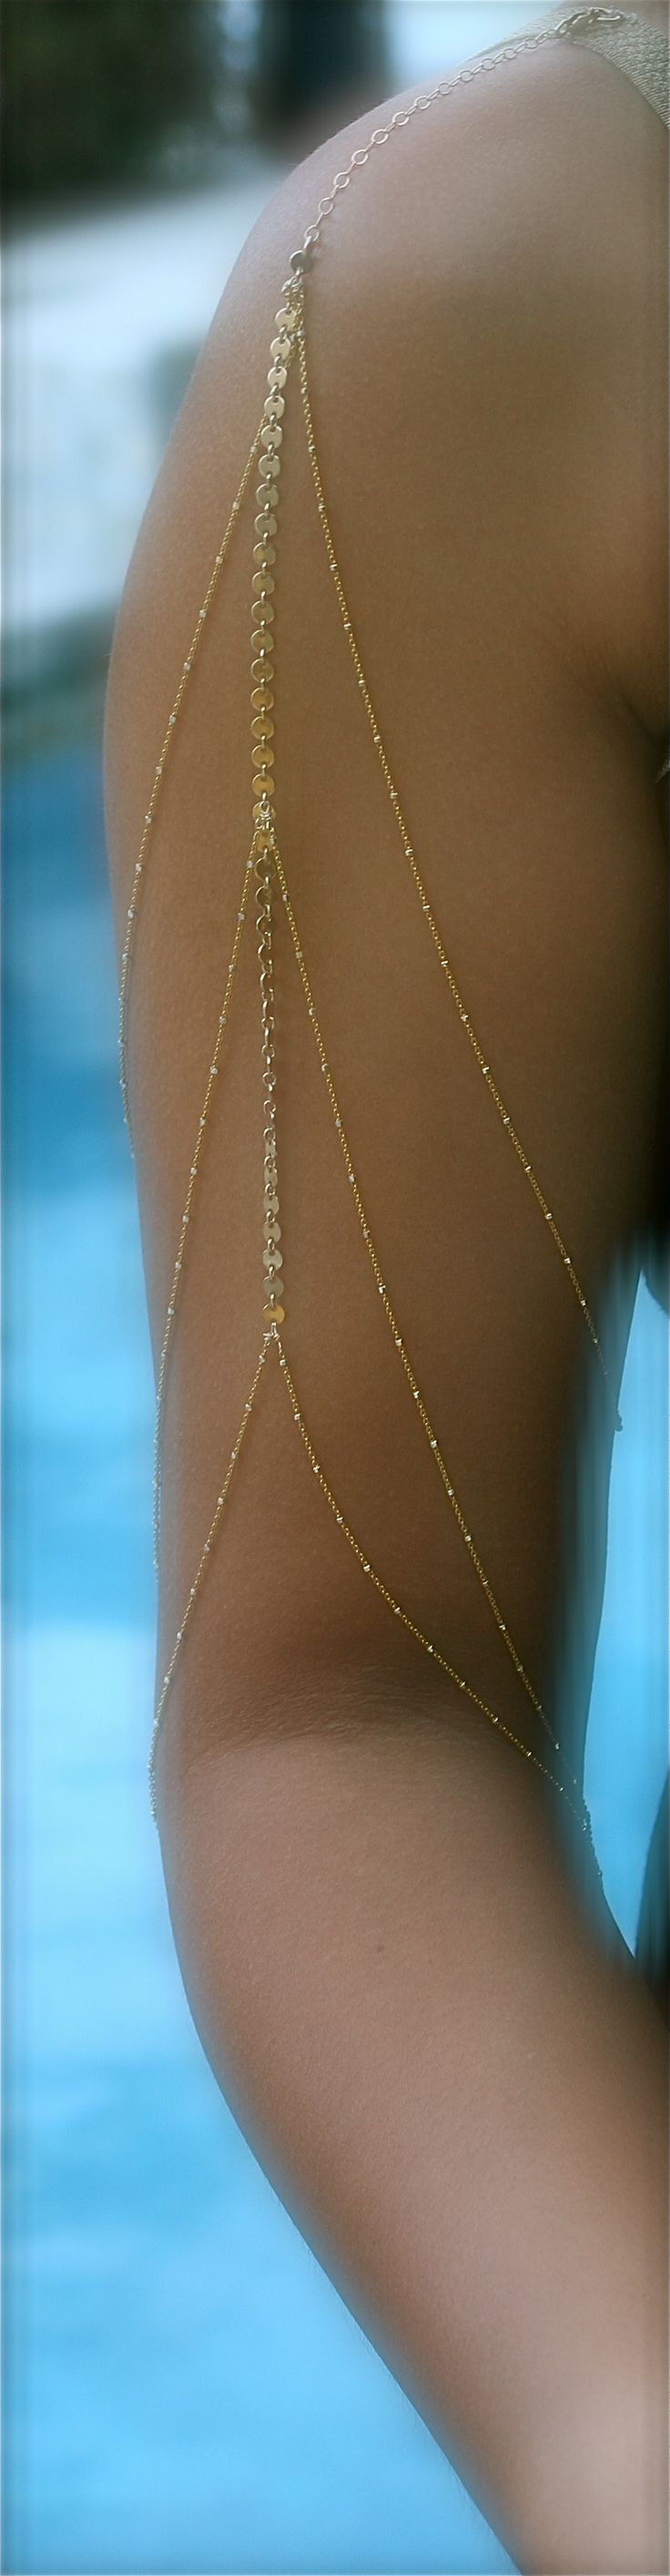 90 best Body Jewelry images on Pinterest | Body jewelry, Body chains ...